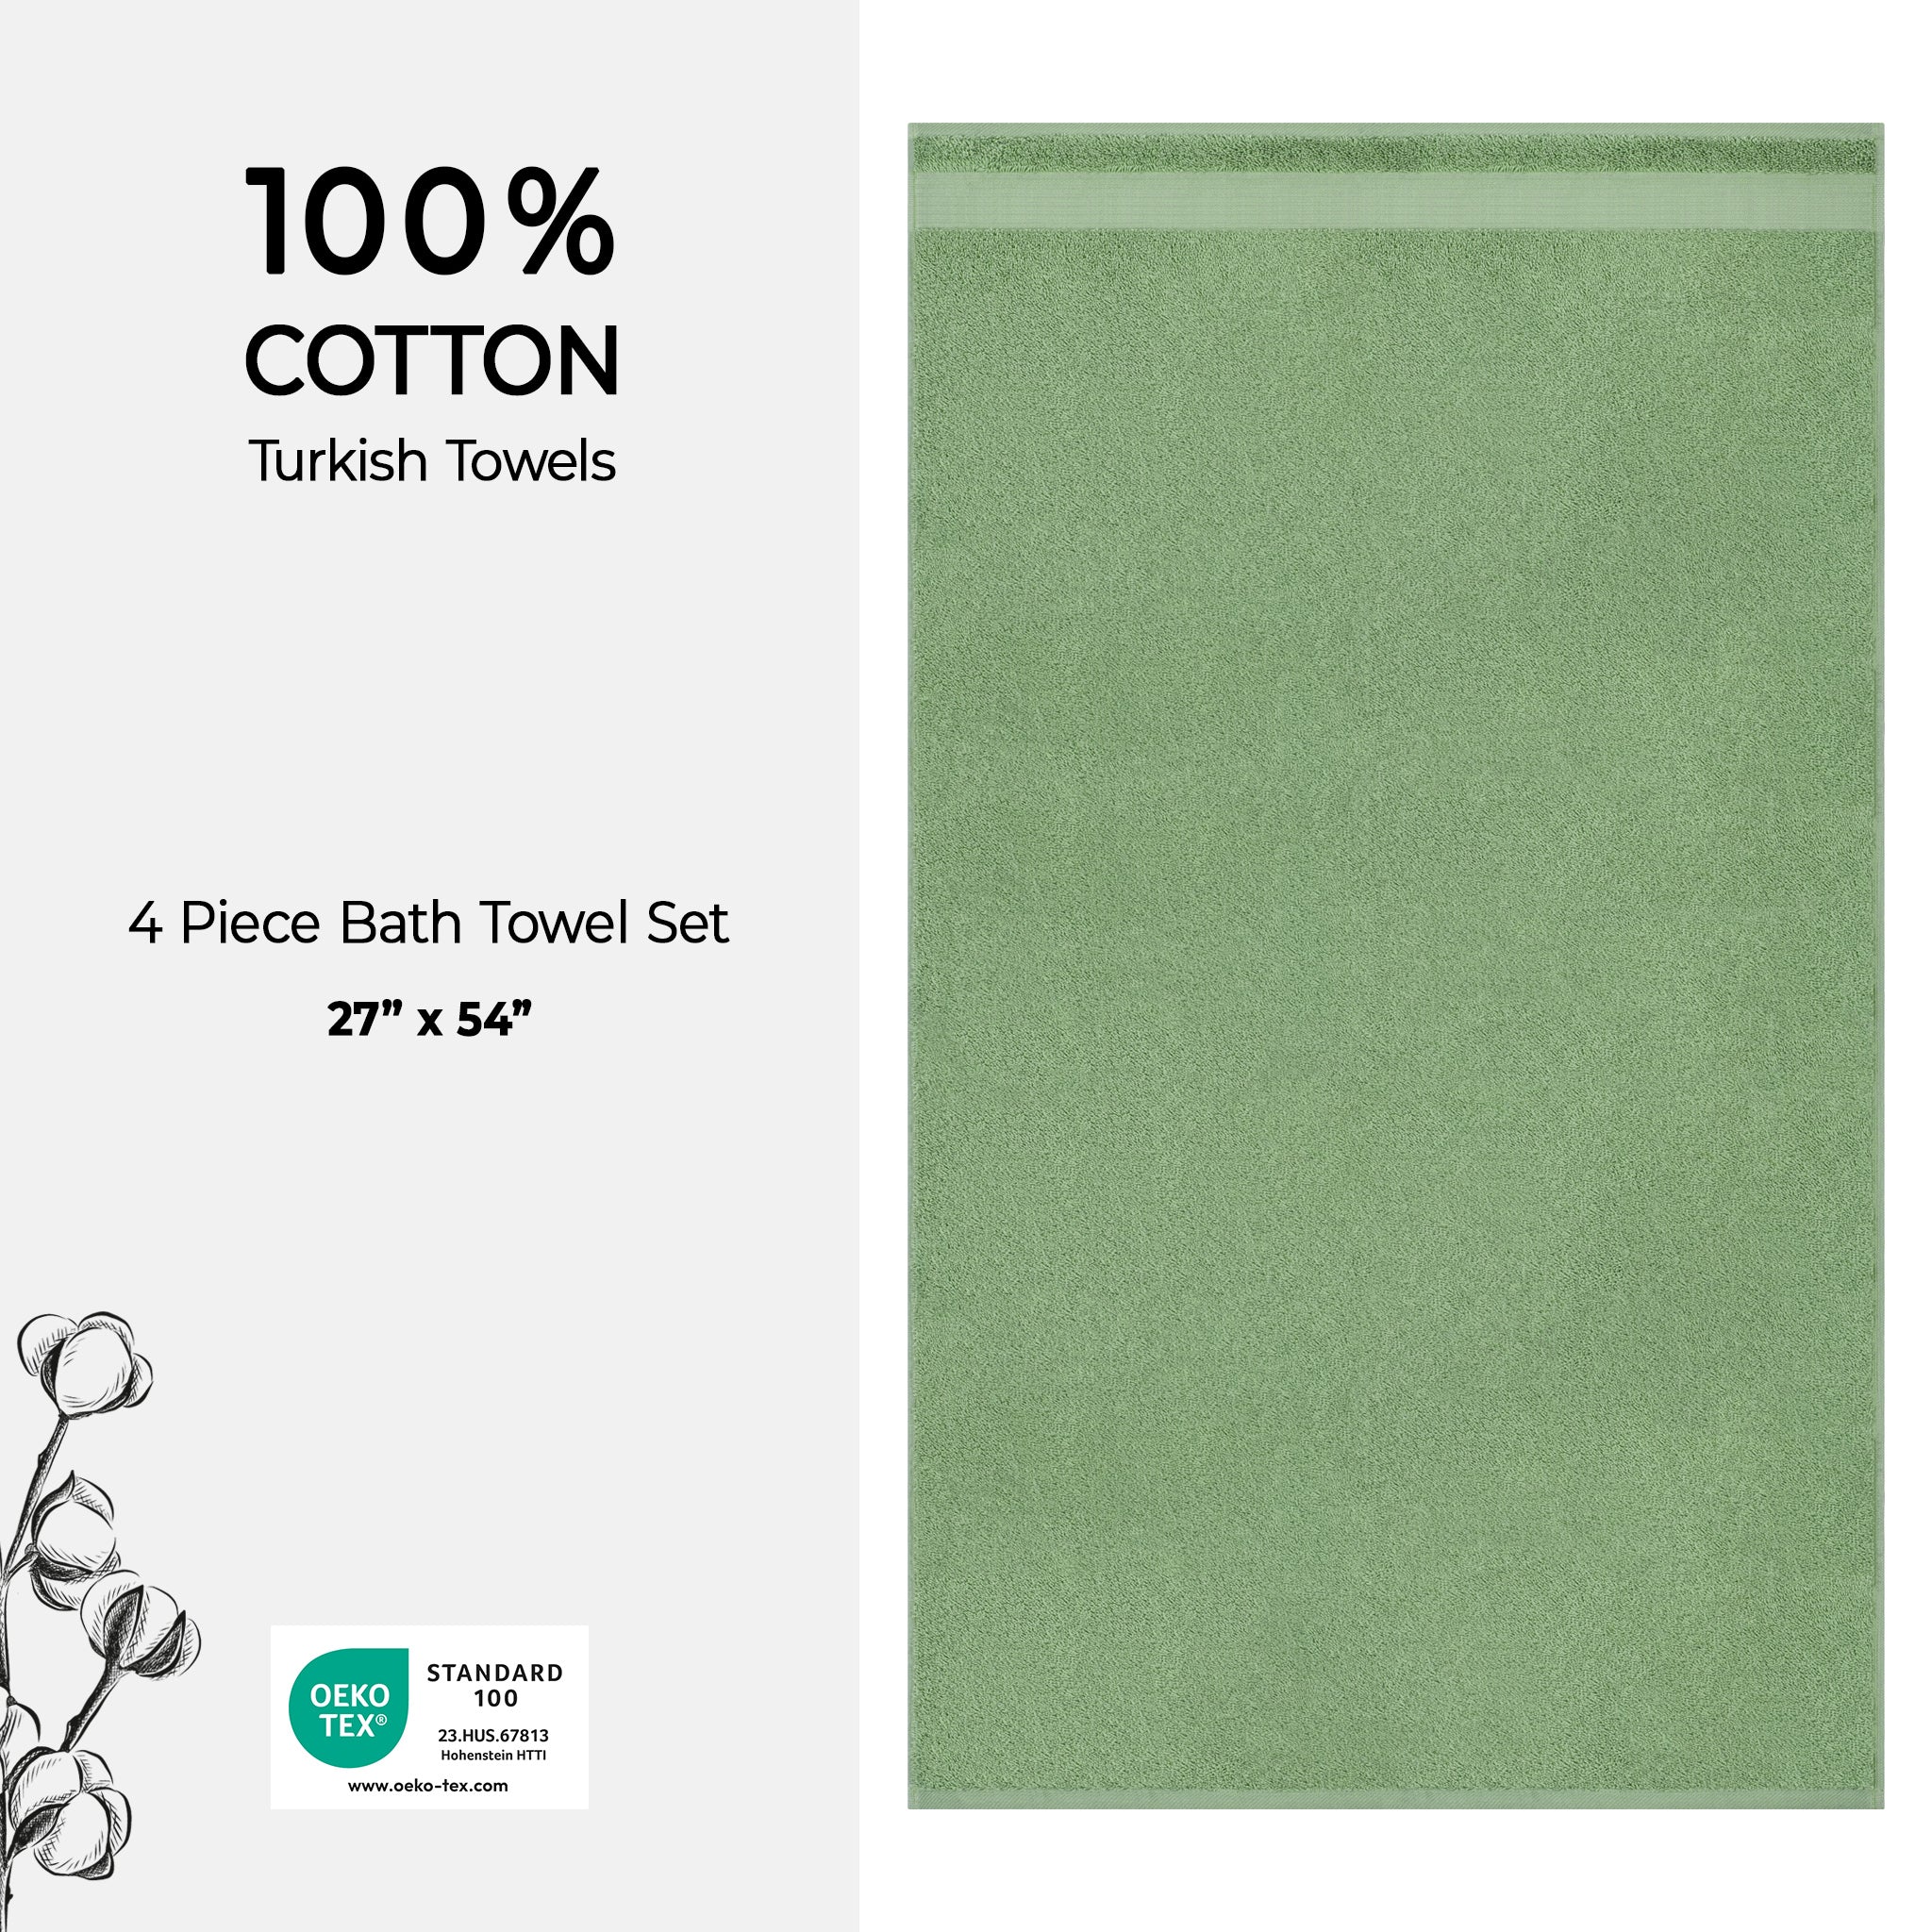 American Soft Linen Bekos 100% Cotton Turkish Towels, 4 Piece Bath Towel Set -sage-green-04